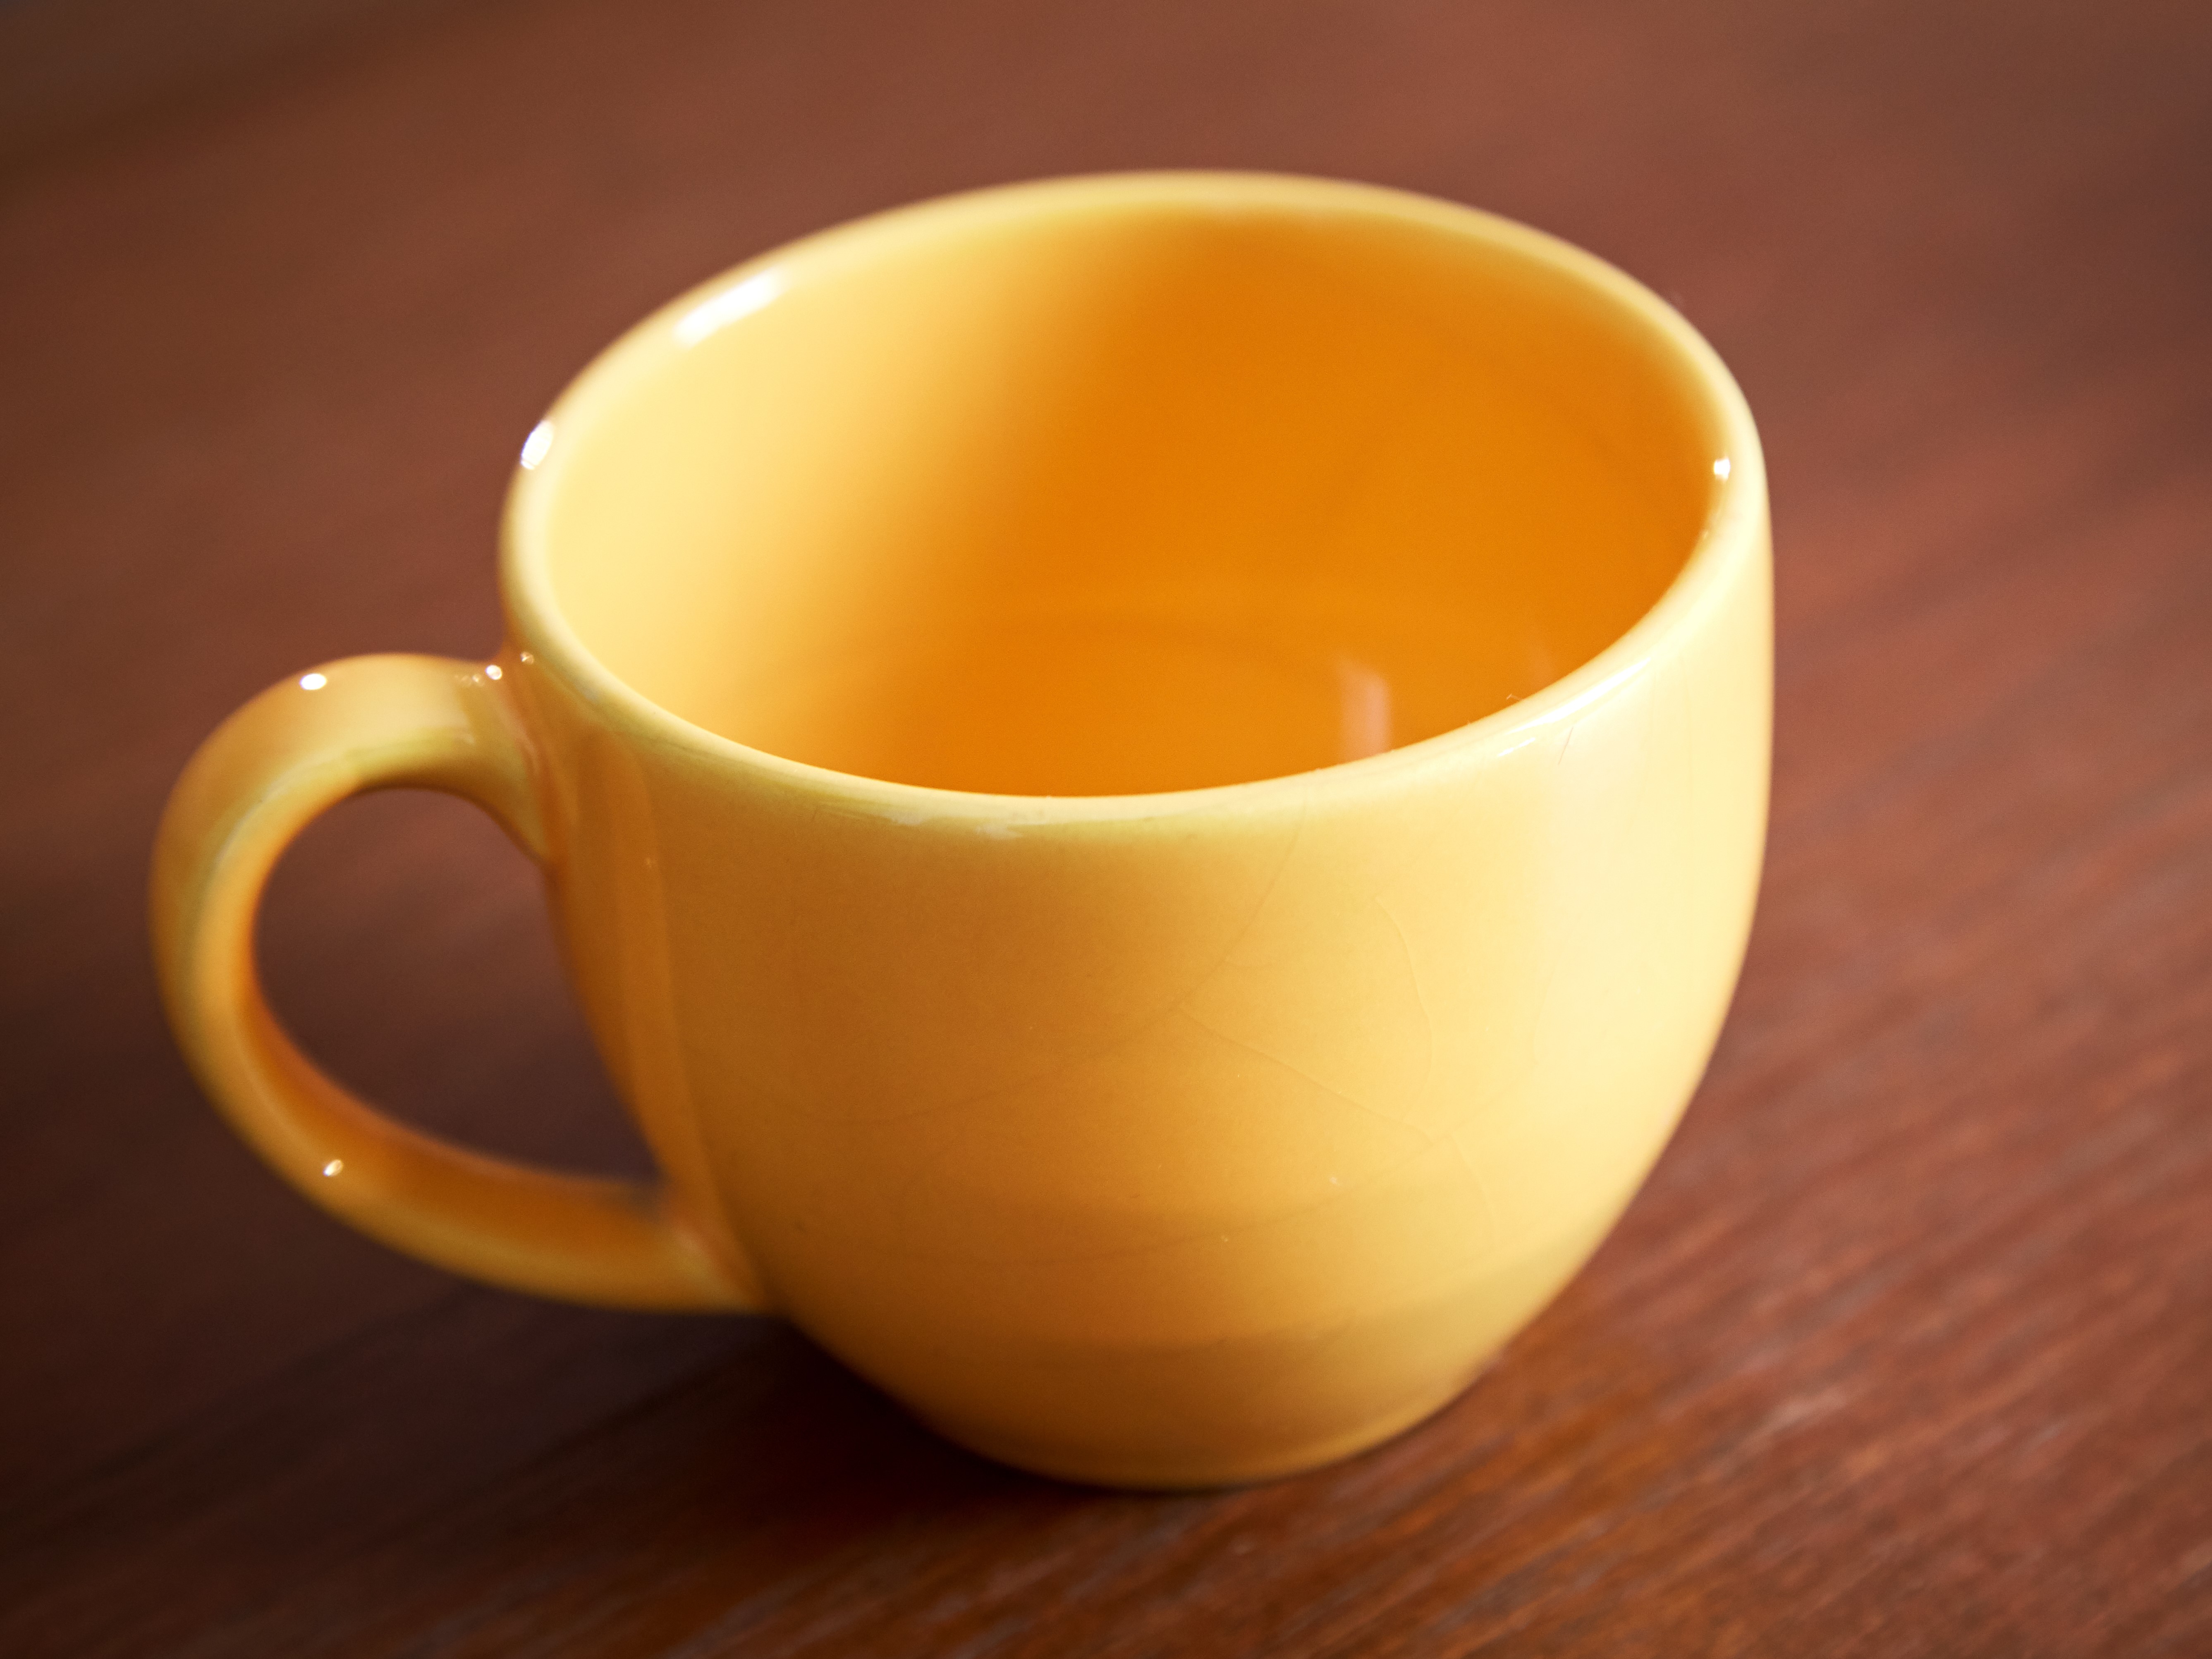 wide, yellow mug on wood surface